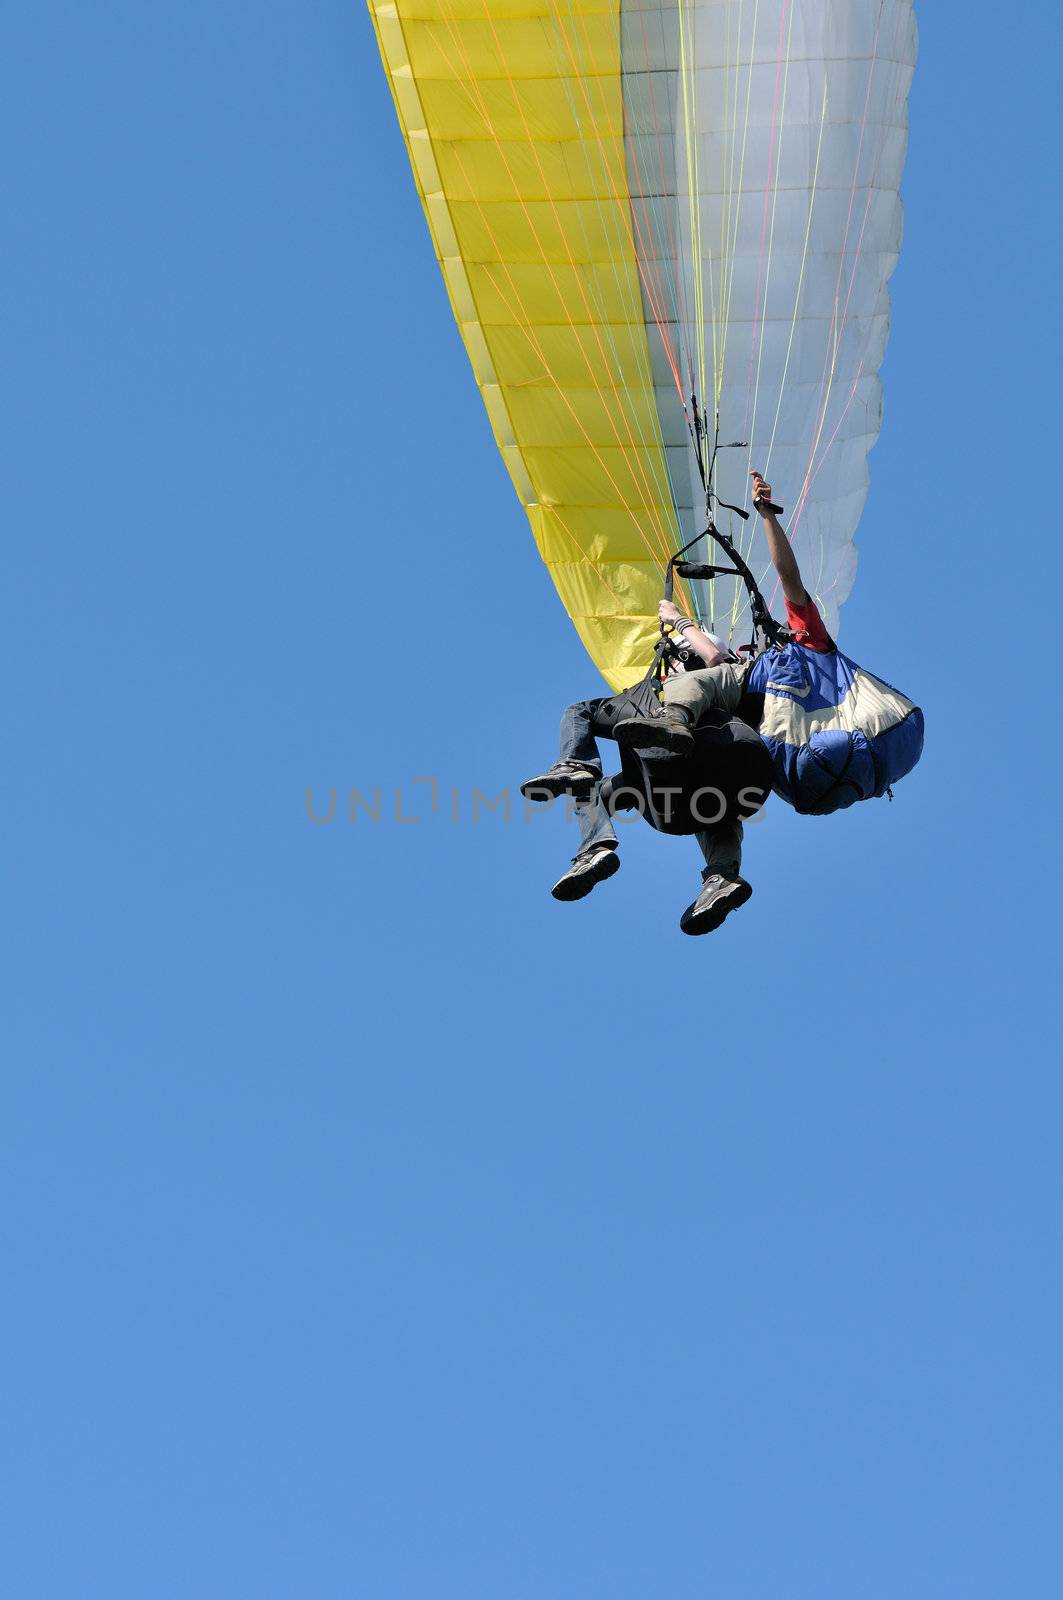 Tandem paragliders by Hbak